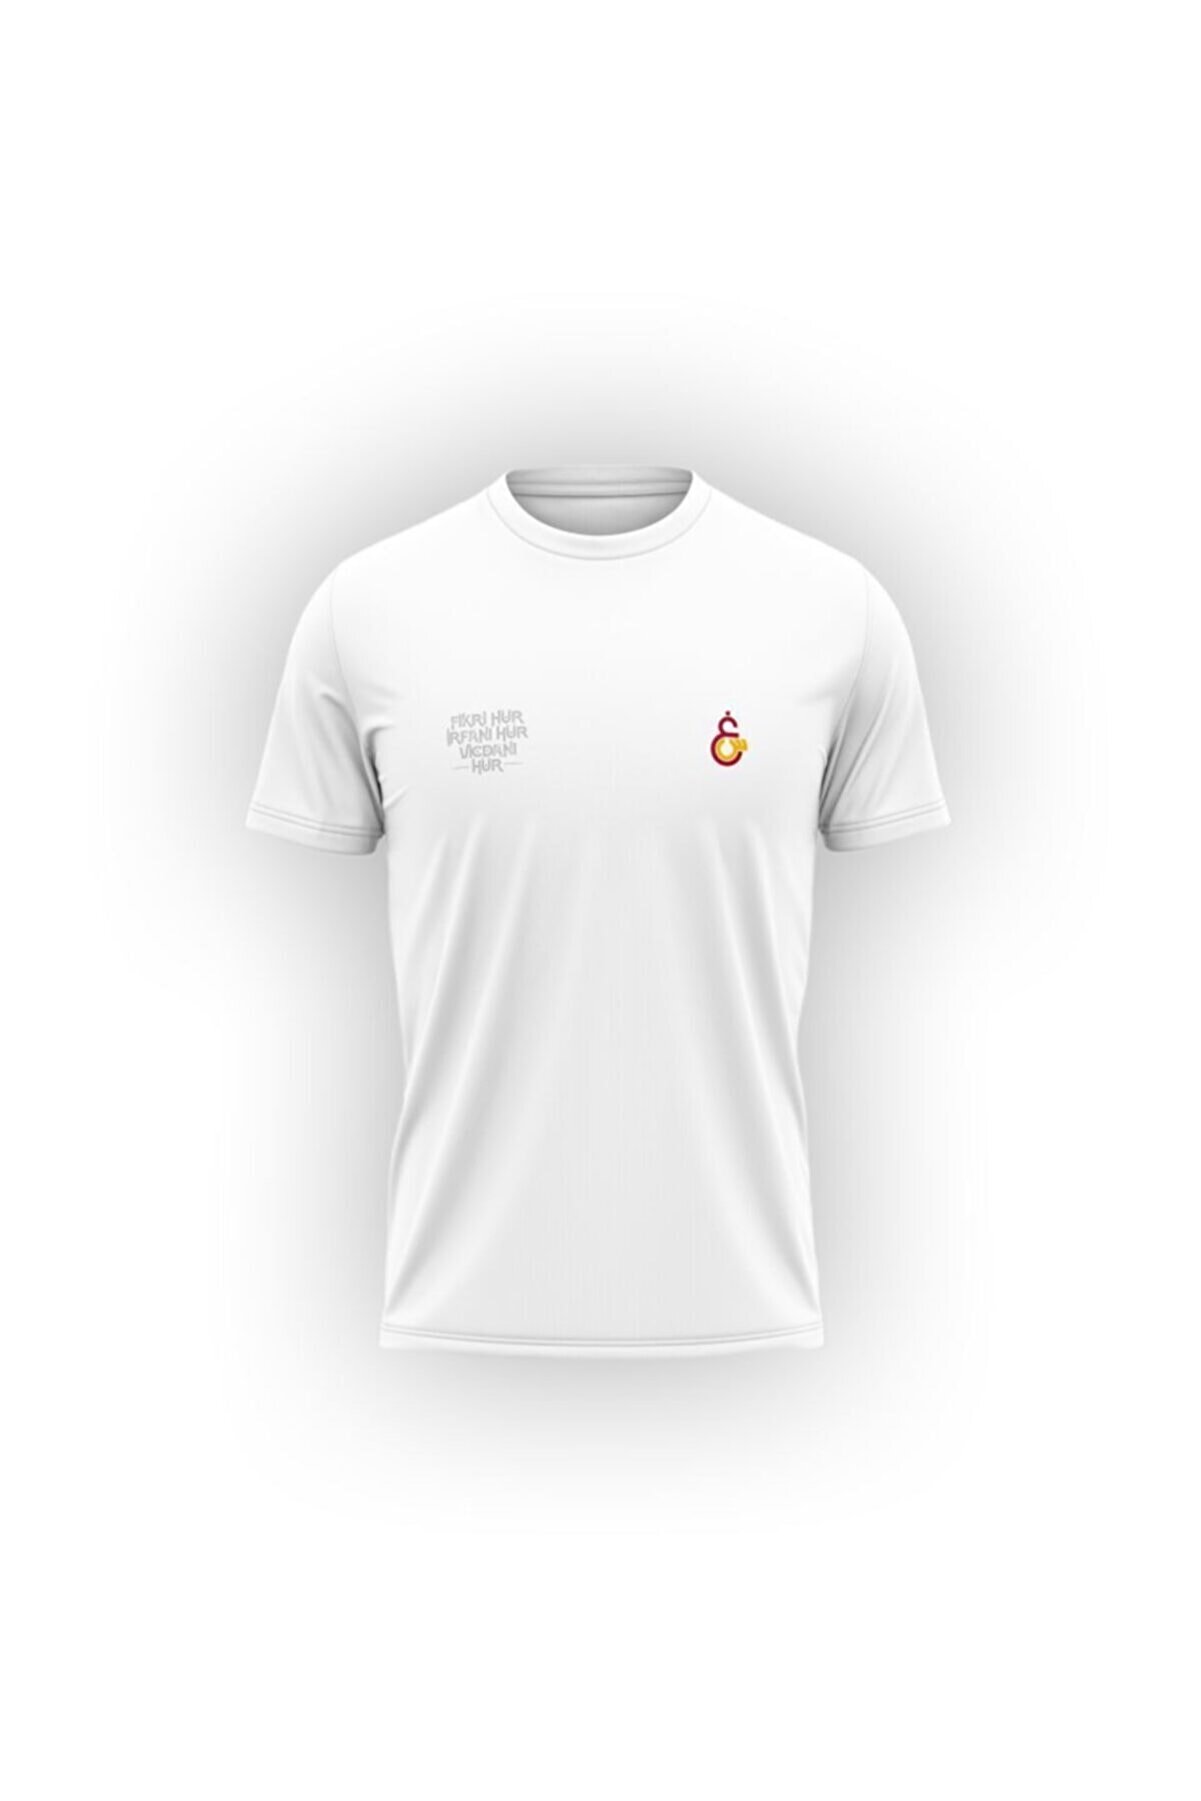 Galatasaray Fikri Hür Erkek T-shirt E211702